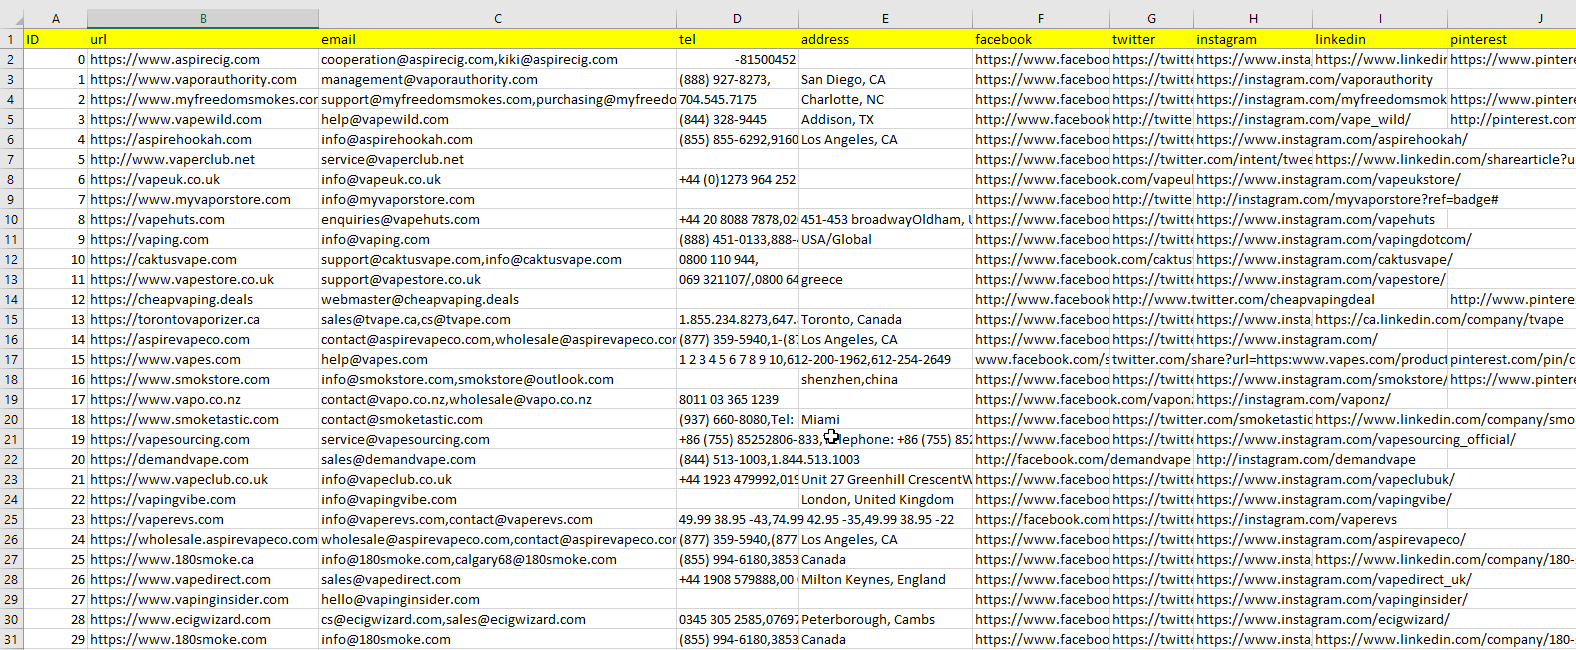 Sample Screenshots of Our Global CBD and Vape Shop E-Mail List